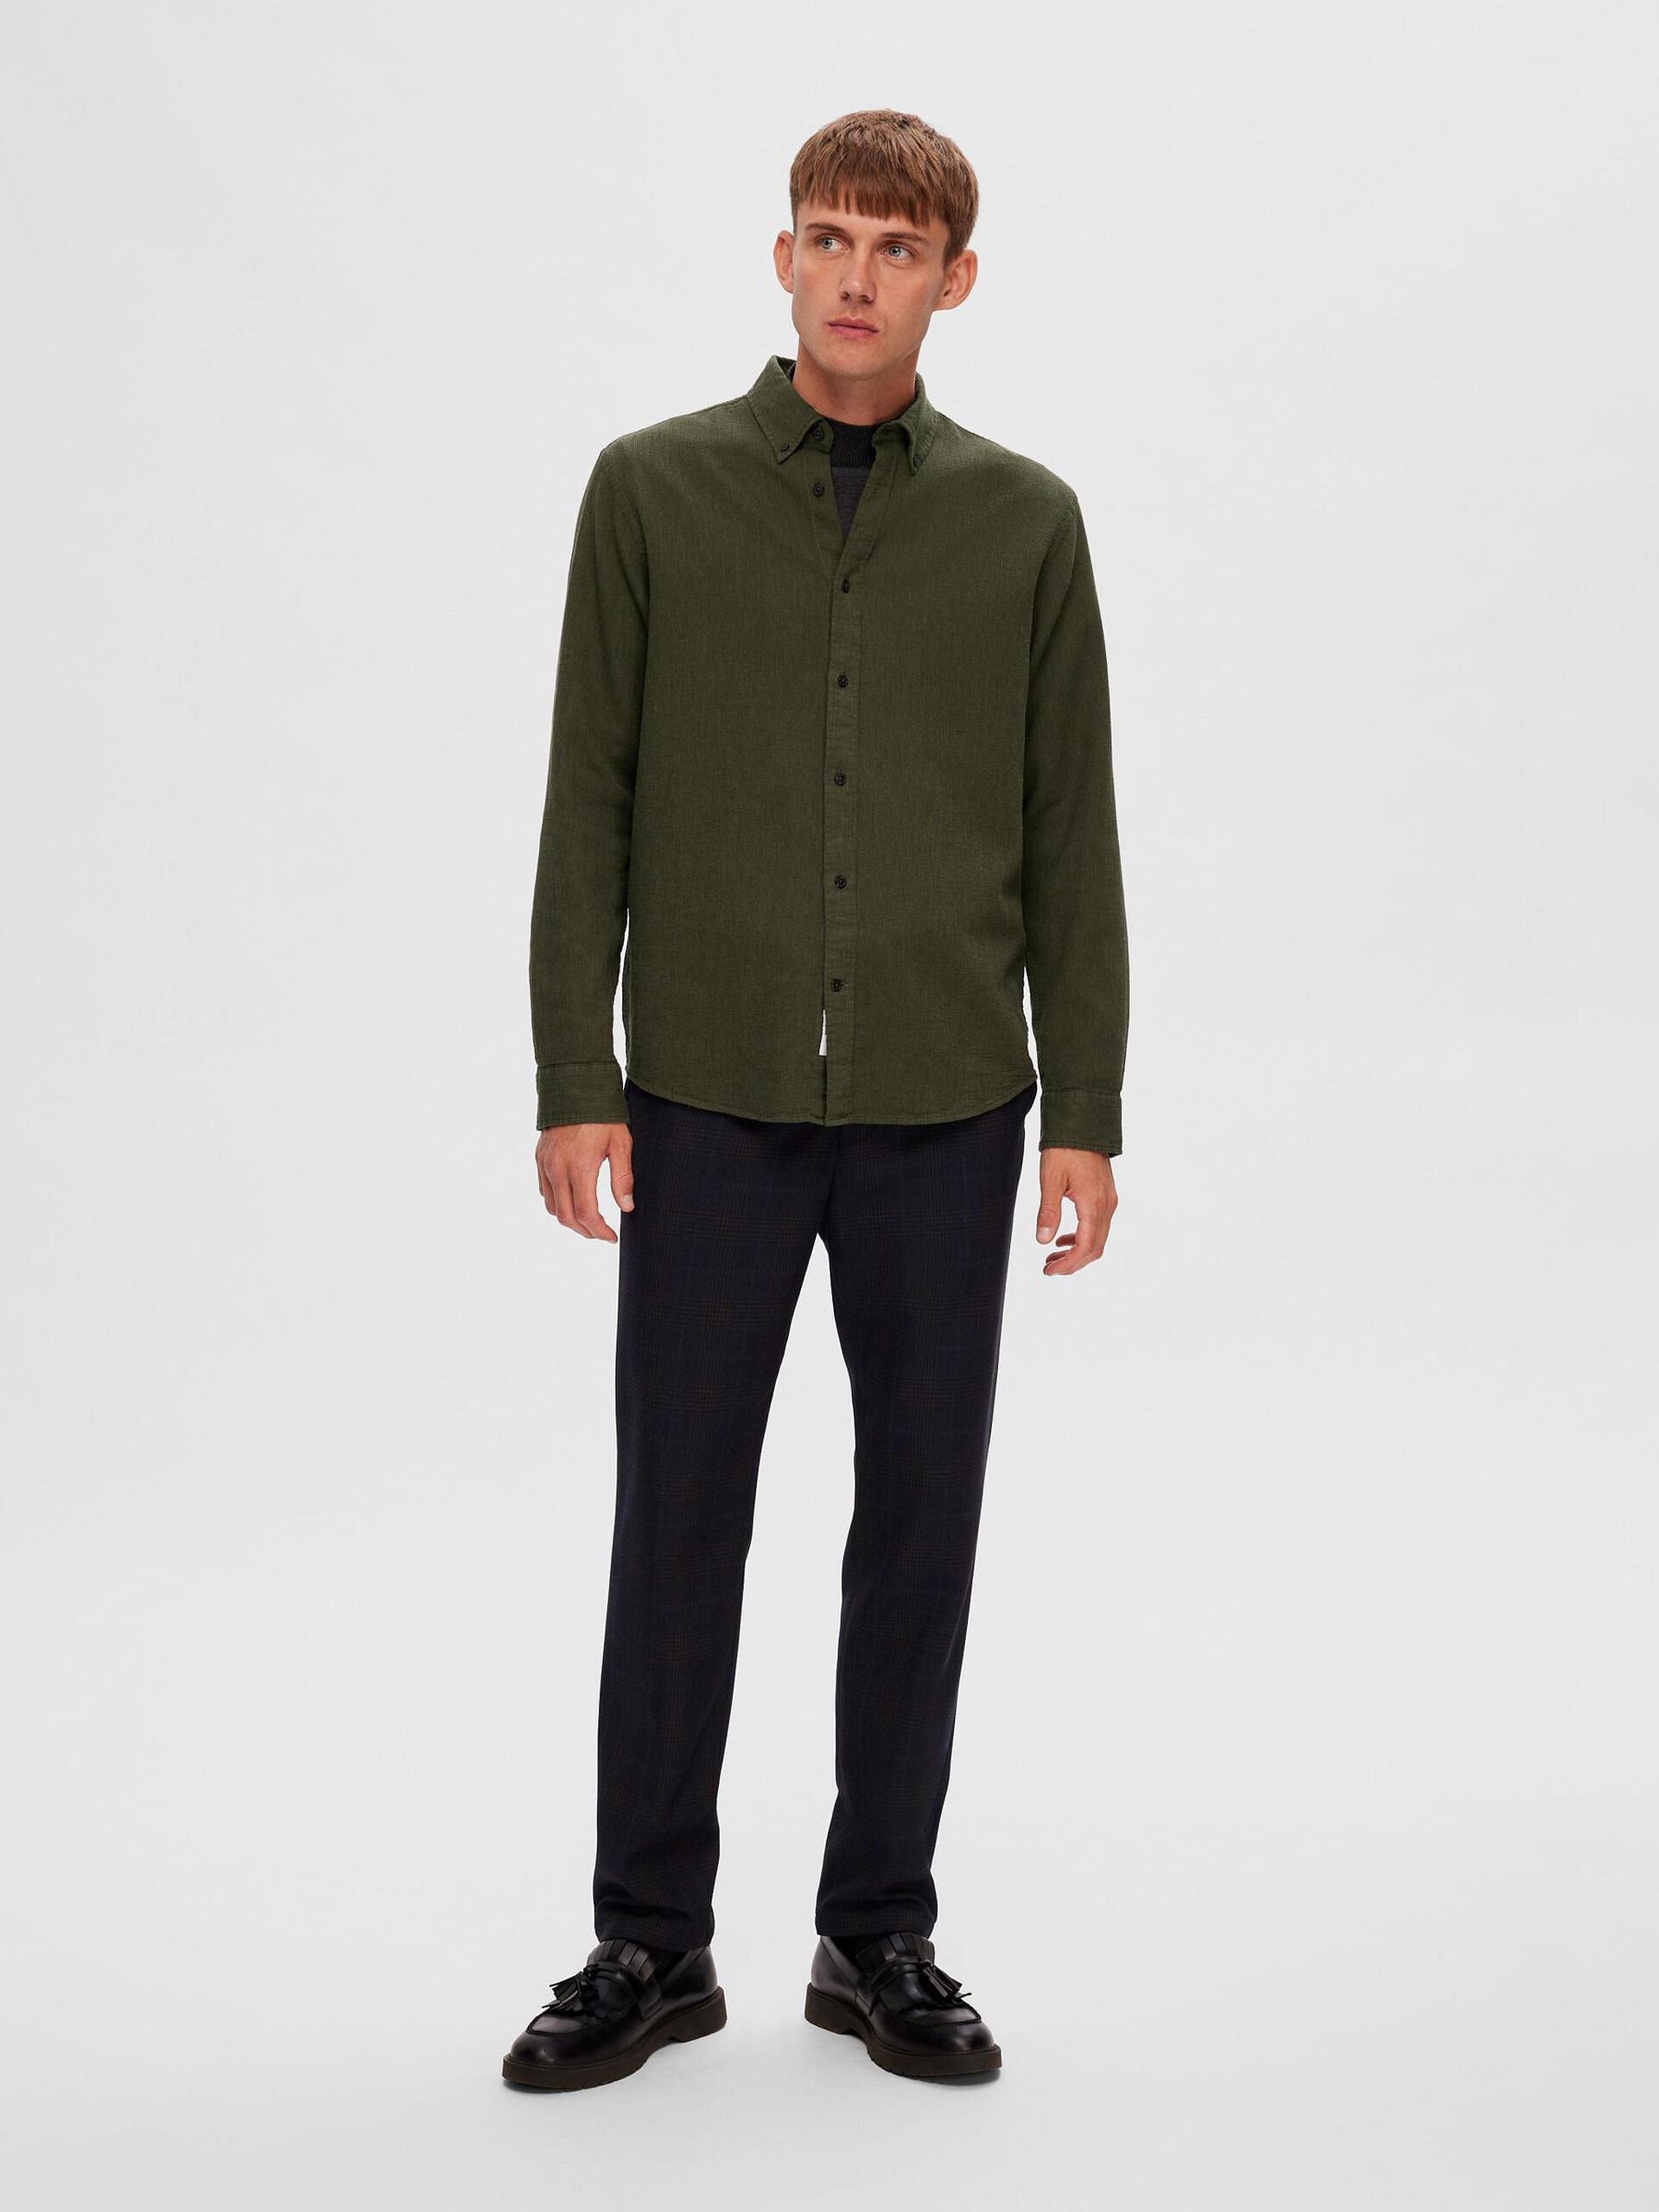 Green Oxford Premium Cotton Over Shirt – The Foomer